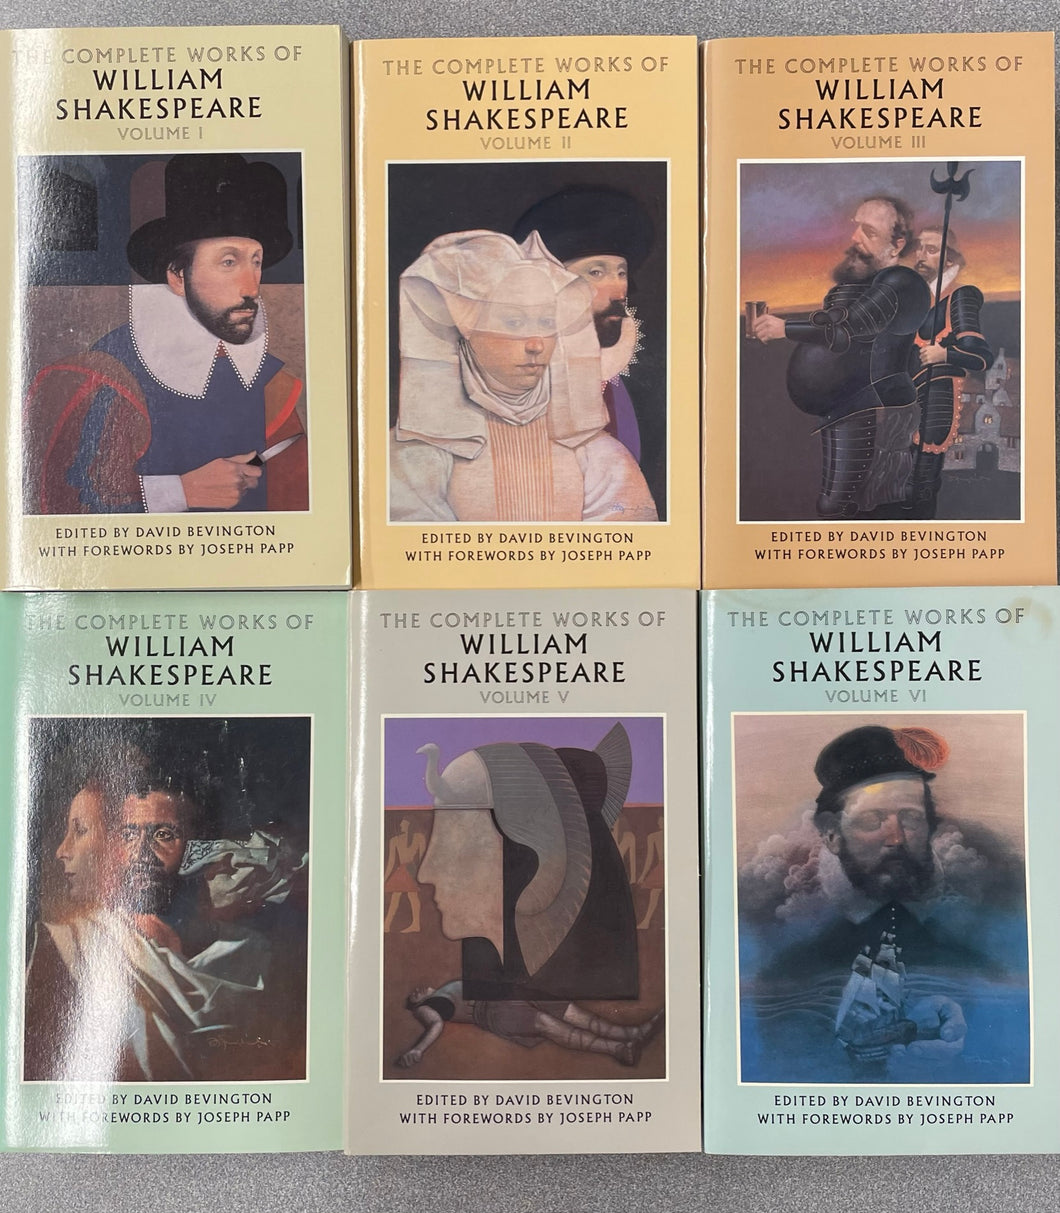 Shakespeare, William, The Complete Works of William Shakespeare, Volumes I-VI, Bevington, David, ed. [1988] SH 6/23